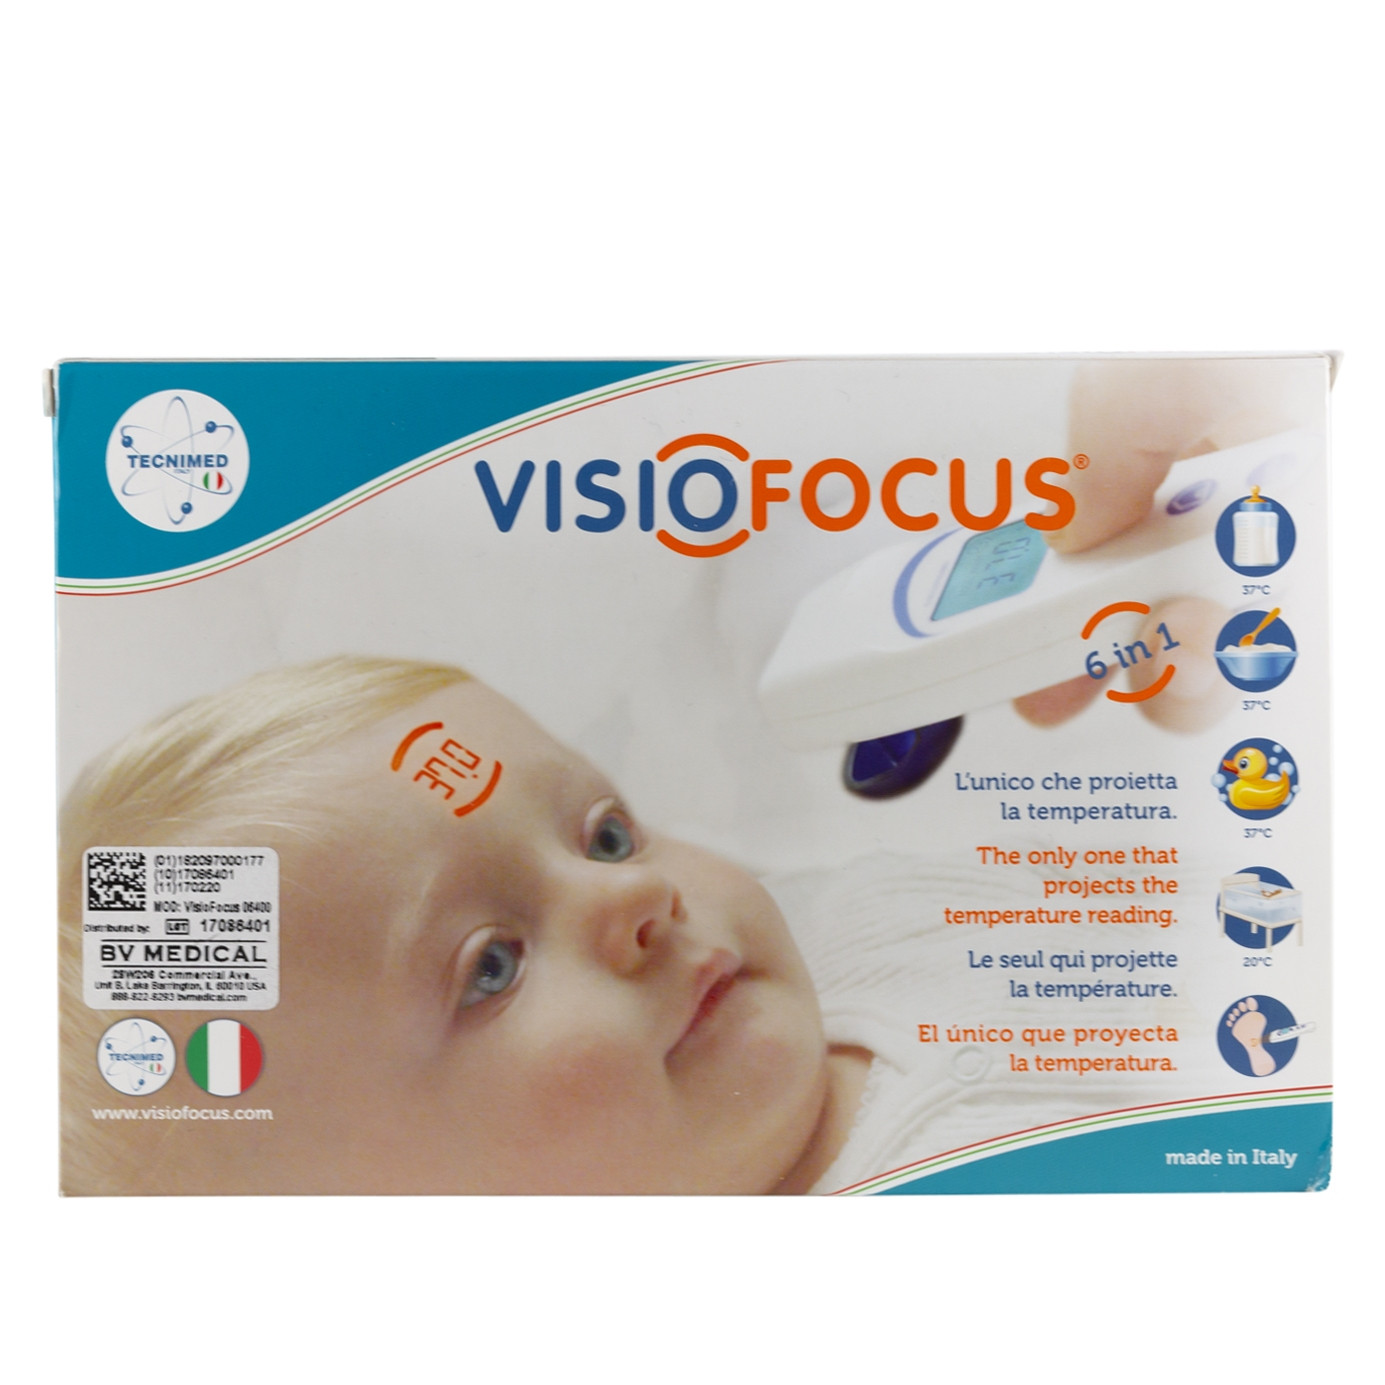 Tecnimed VisioFocus Non-Contact Thermometer